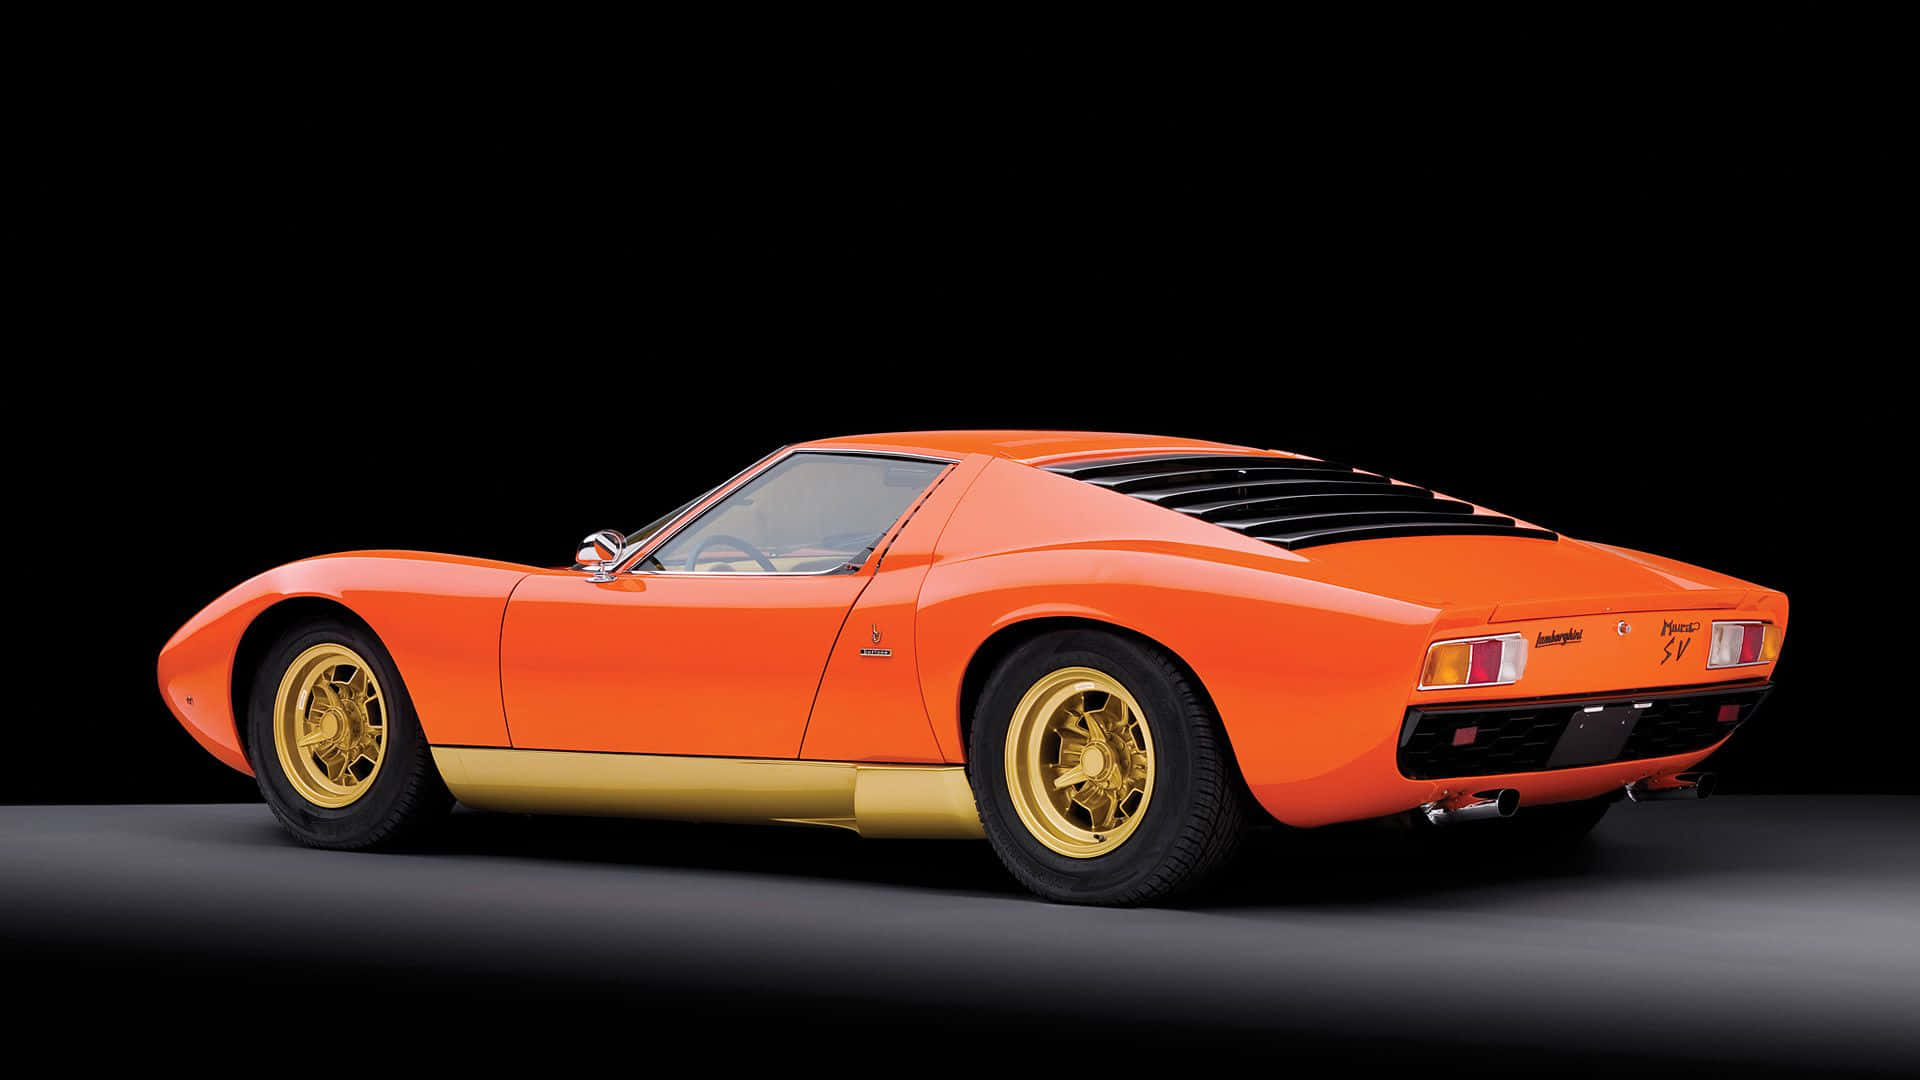 Iconic Lamborghini Miura showcasing its timeless design Wallpaper